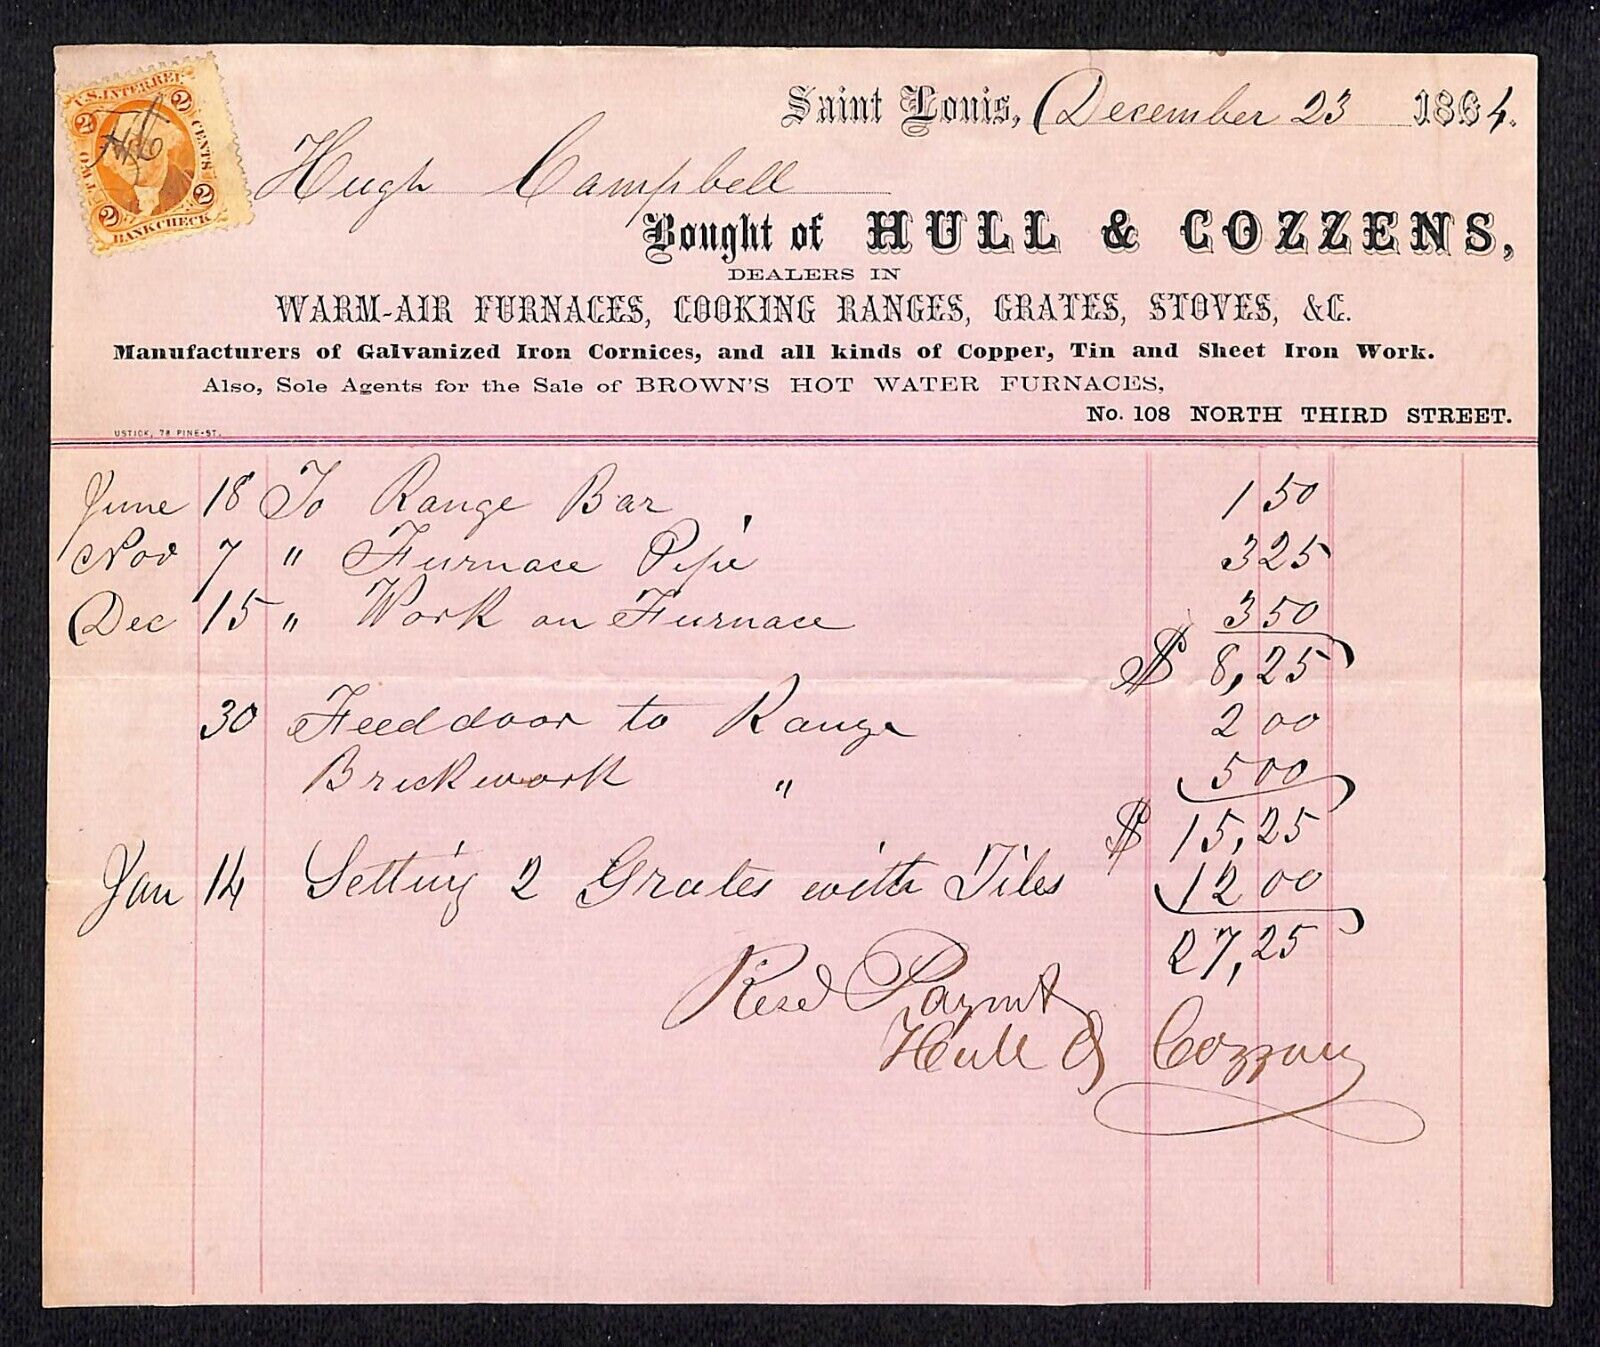 Hull & Cozzens St. Louis, MO Warm Air Furnaces Ranges 1864 Billhead Tax Stamp